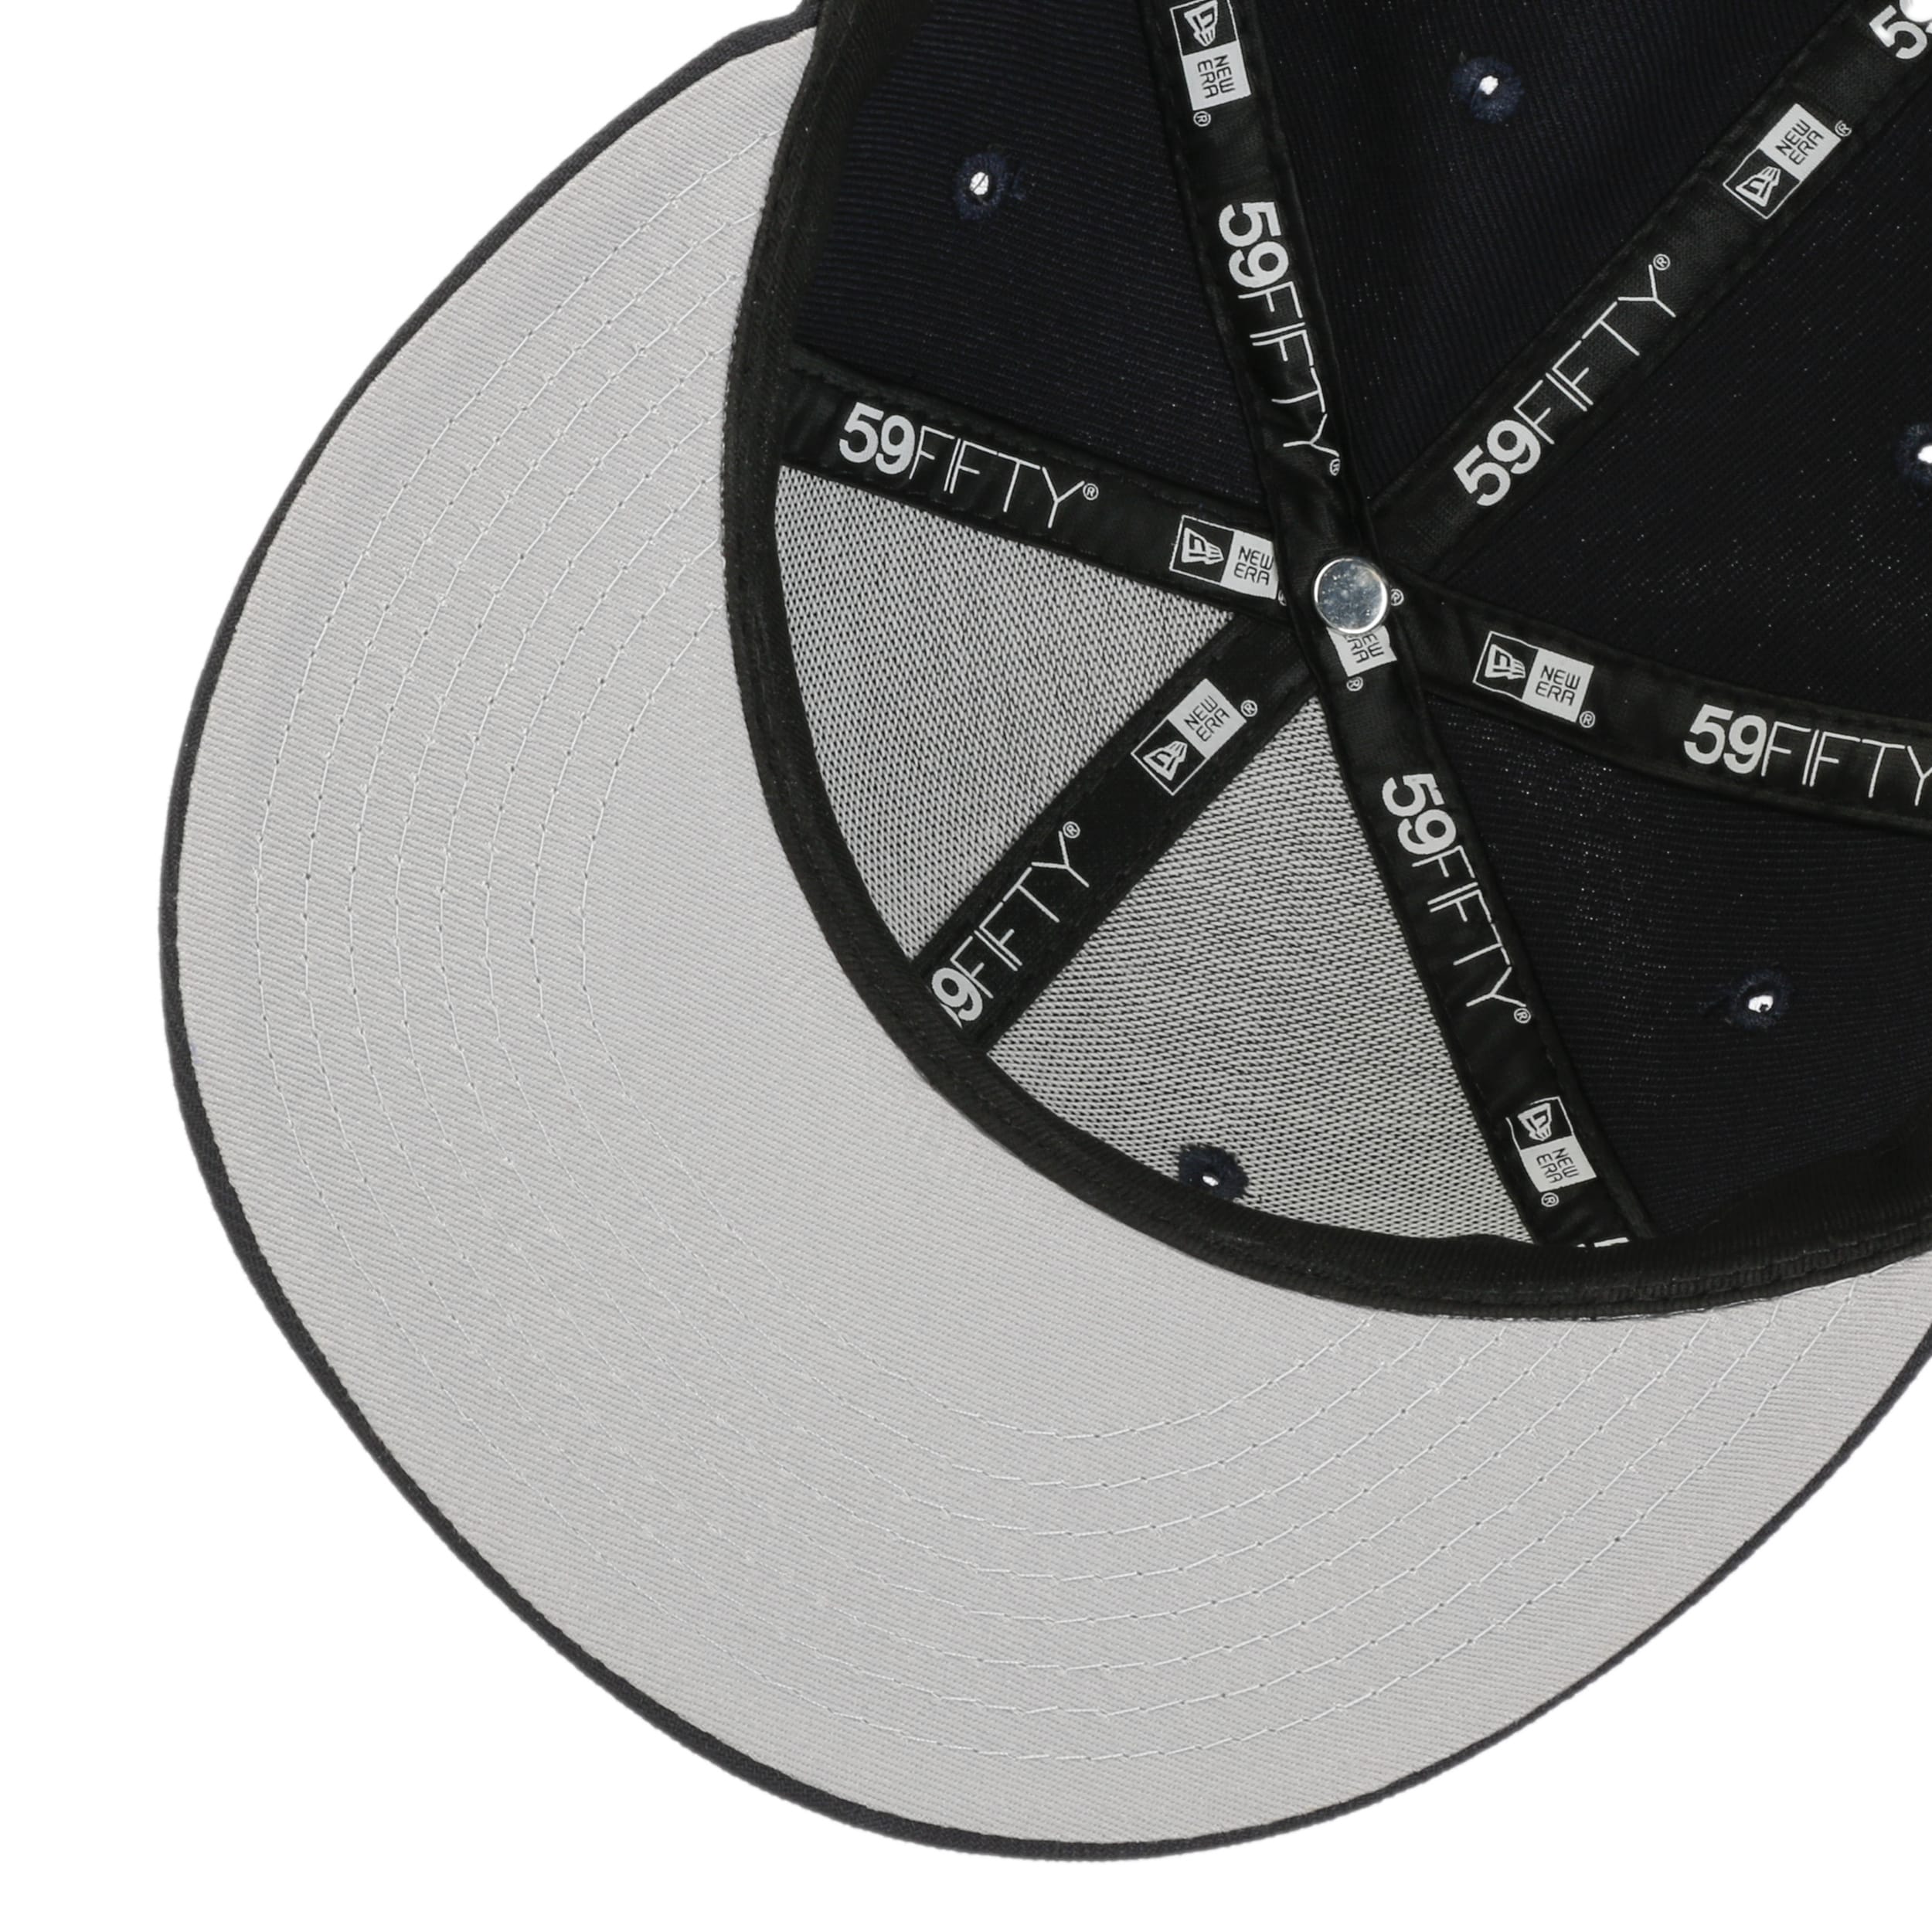 Houston Astros New Era 5950 League Basic Fitted Hat - Black/White